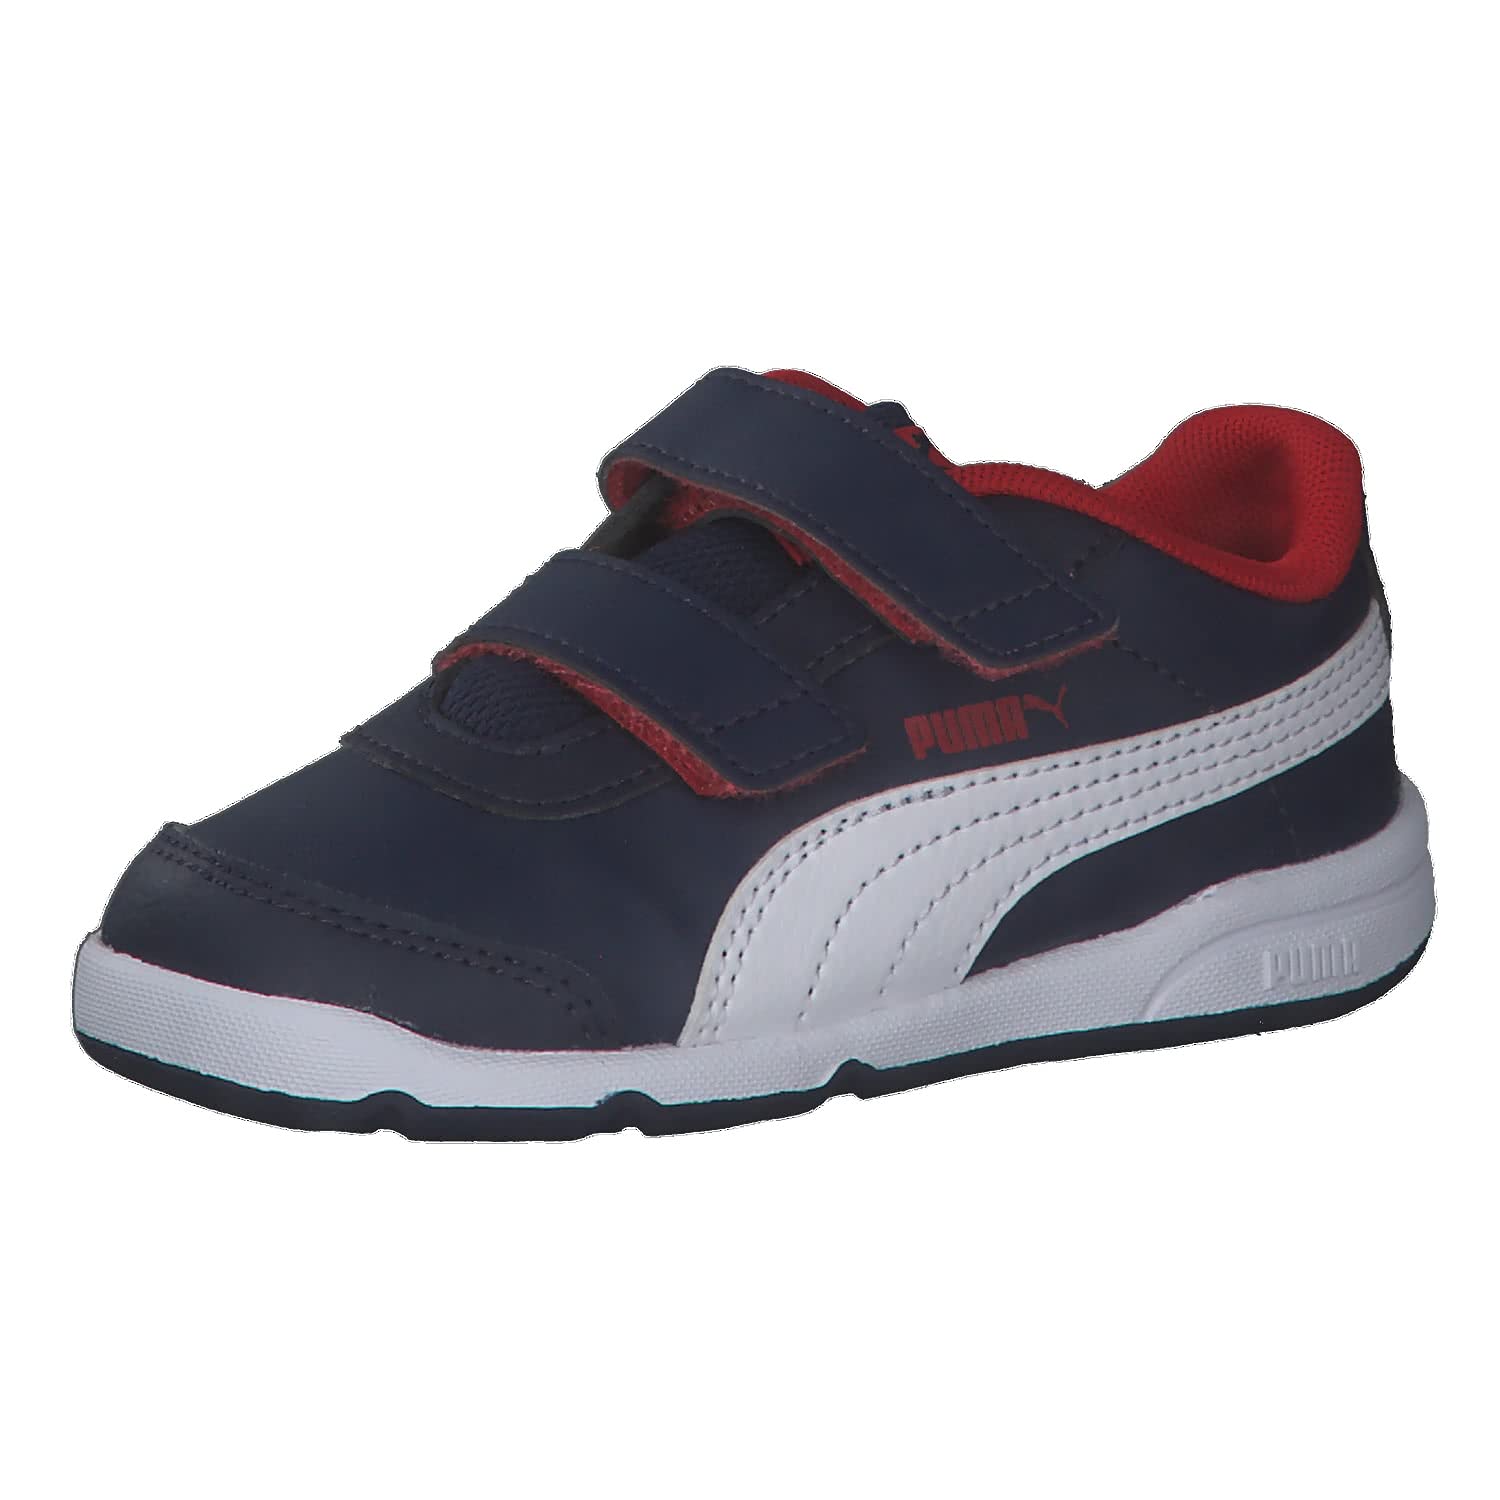 PUMA Jungen Unisex Kinder Stepfleex 2 SL VE V Inf Sneakers, Blau (Peacoat White/Flame Scarlet), 20 EU